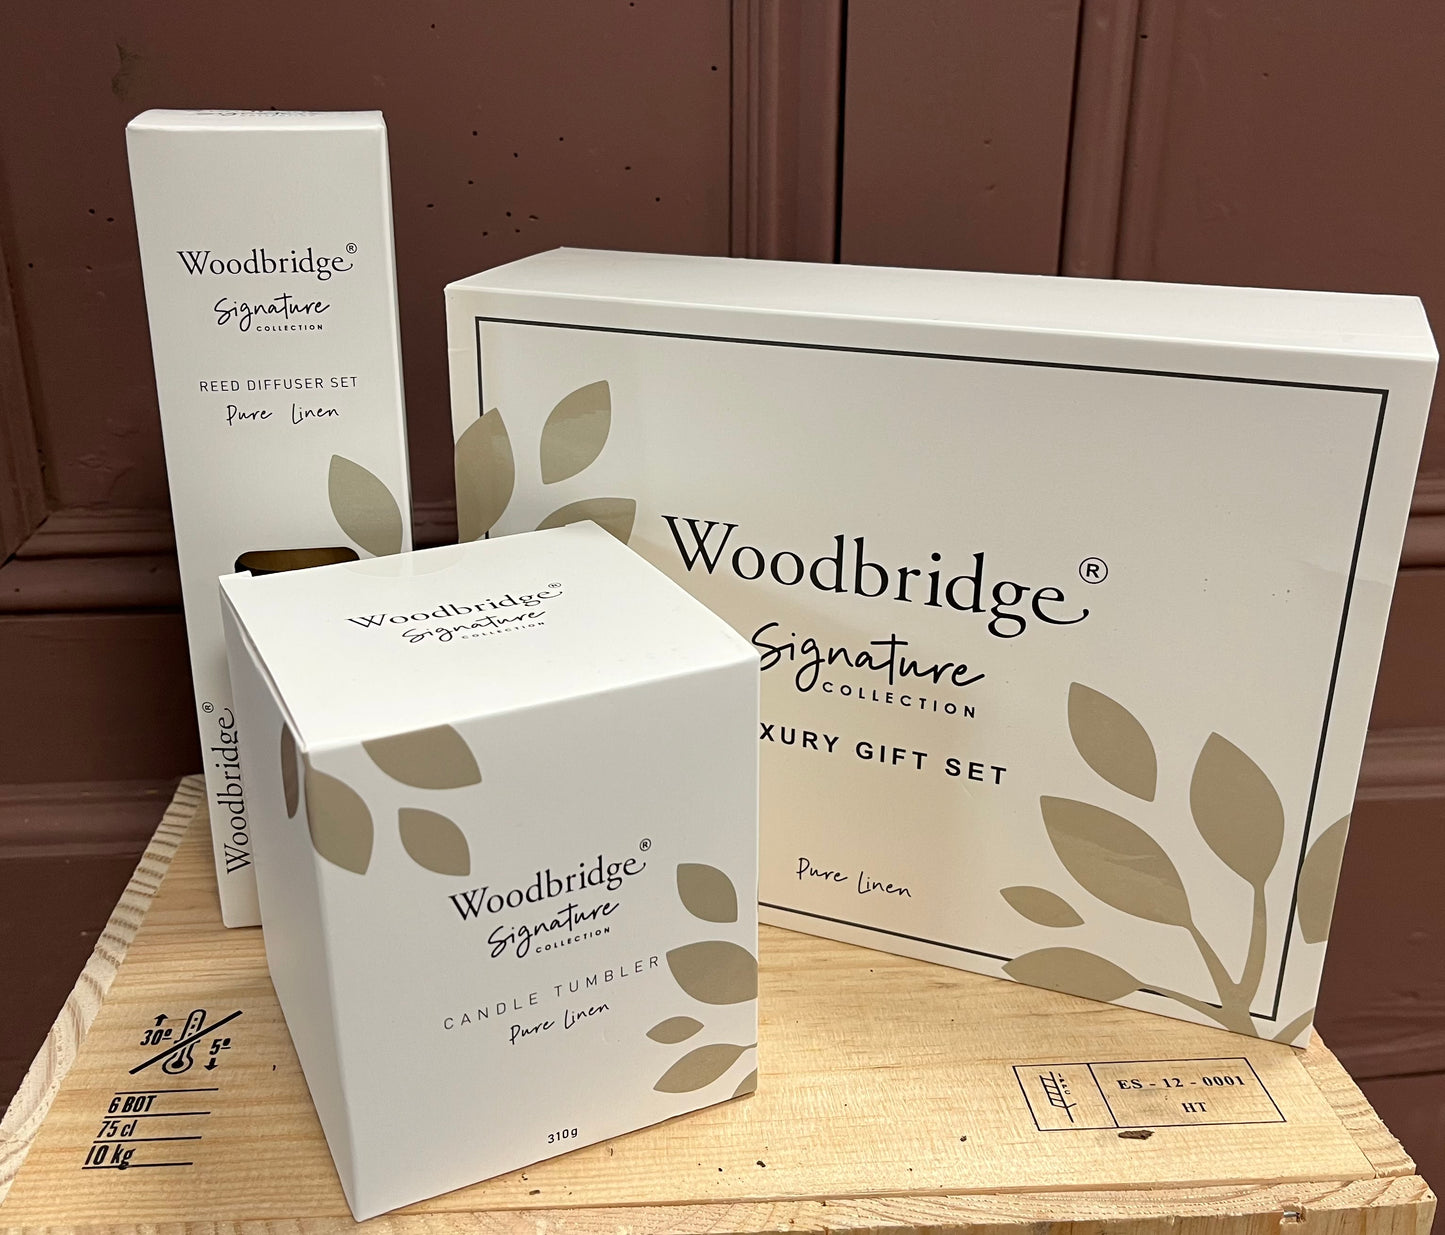 Woodbridge signature collection Reed diffuser set